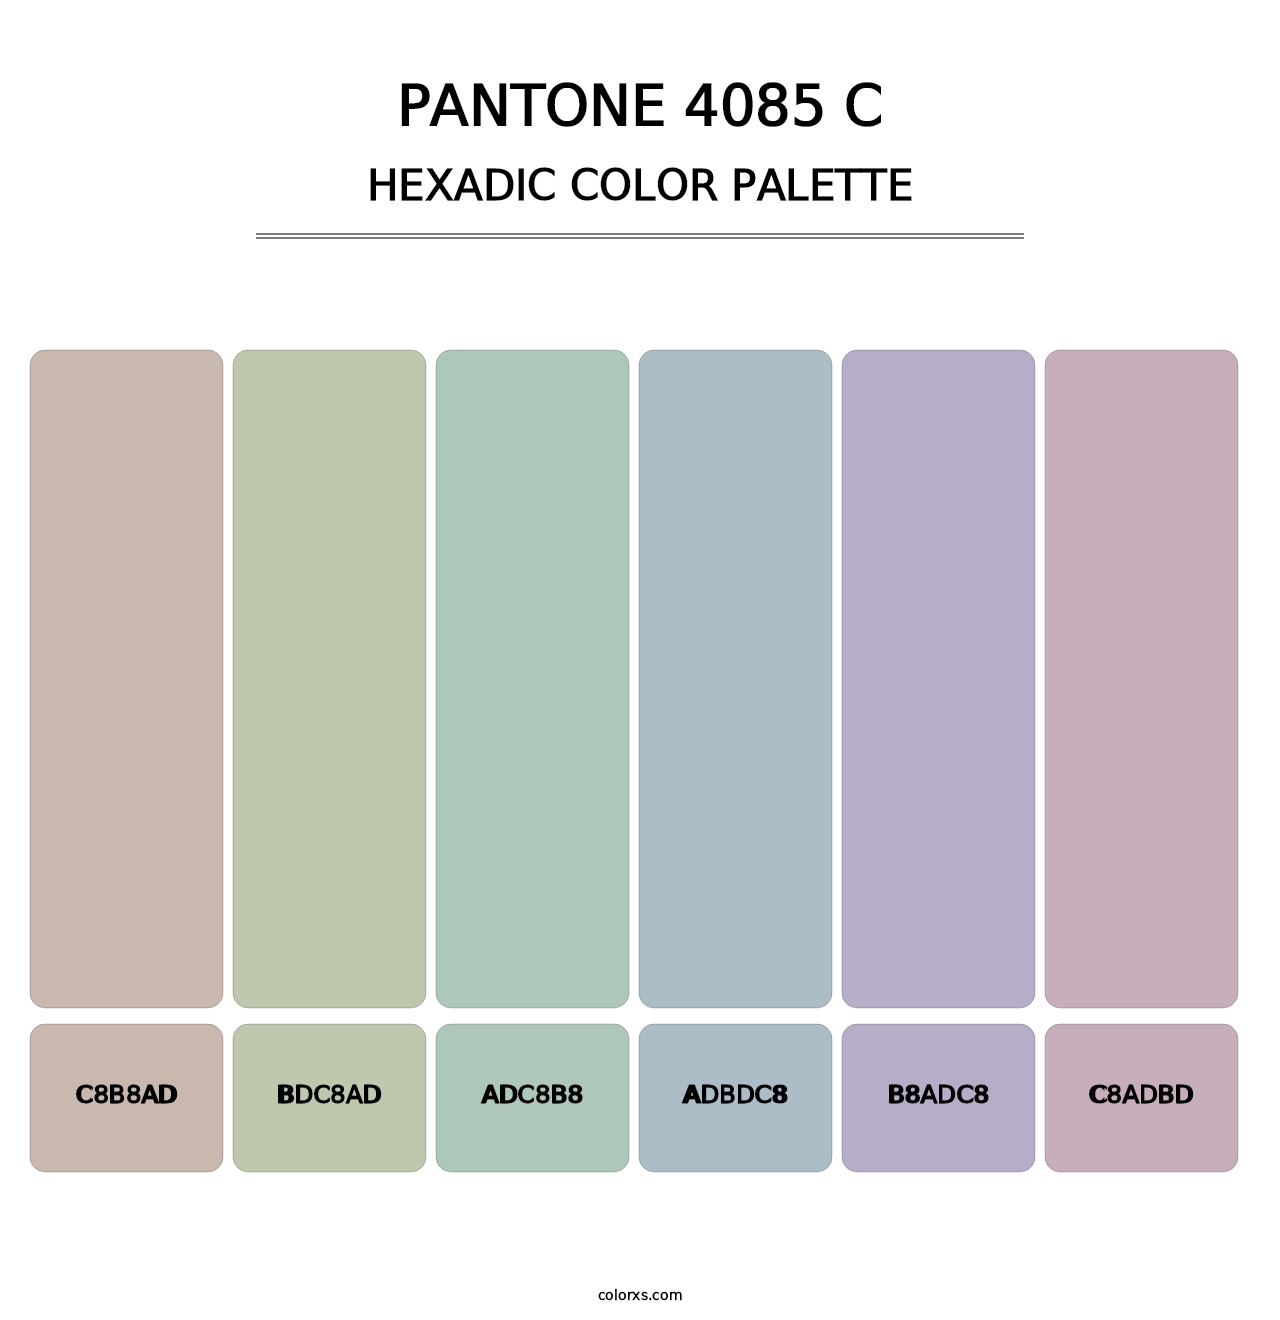 PANTONE 4085 C - Hexadic Color Palette